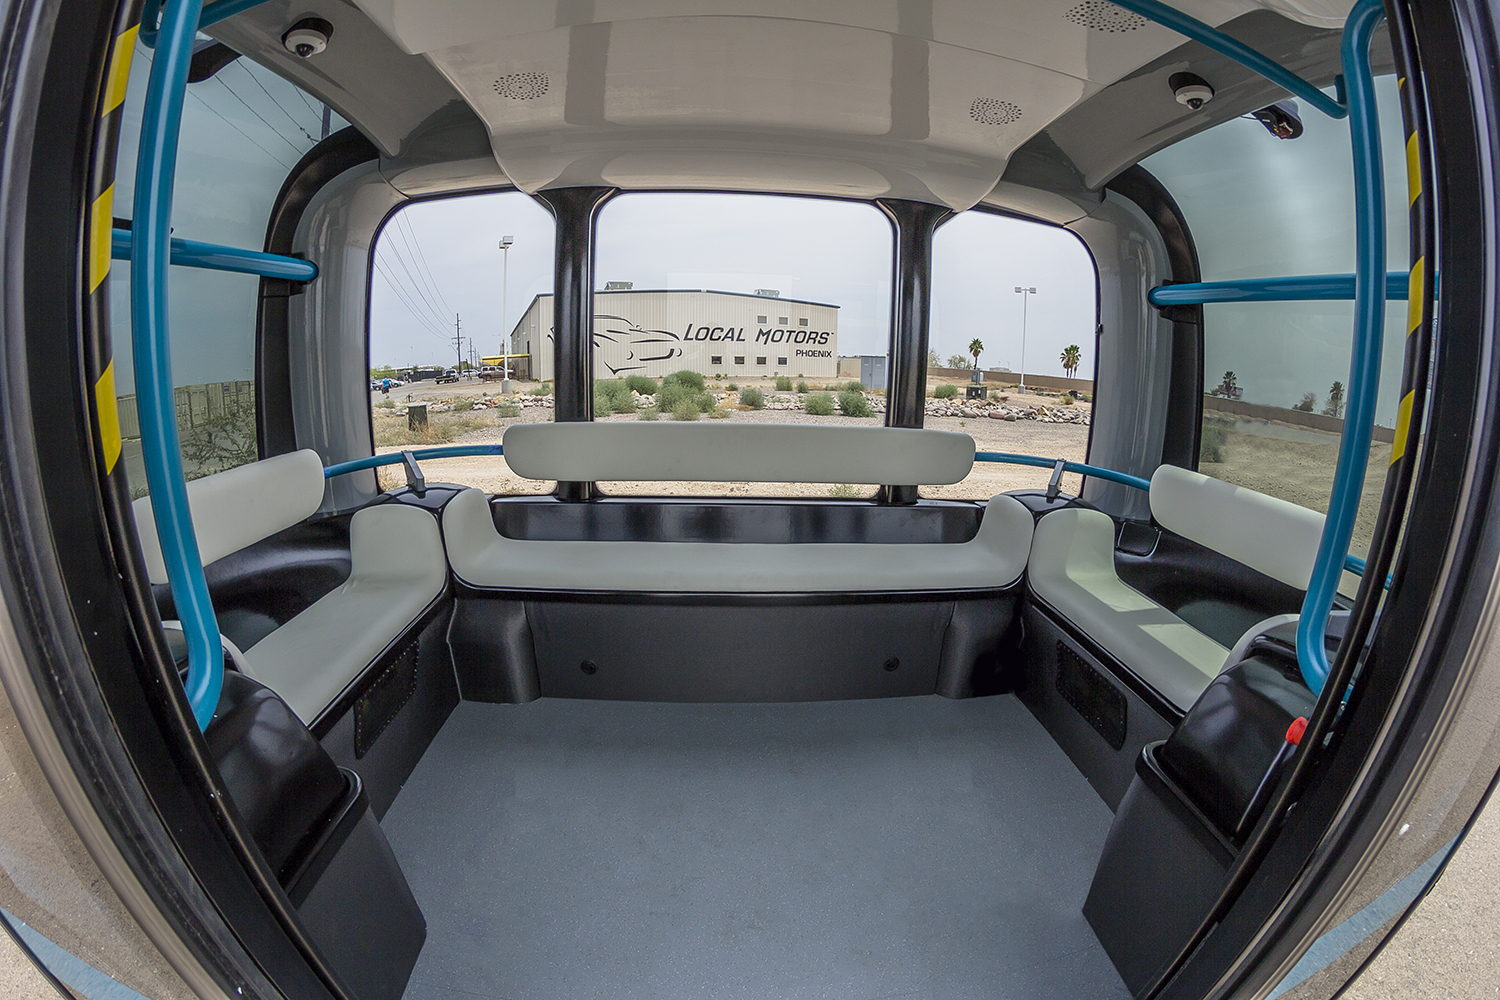 local motors olli driverless bus interior